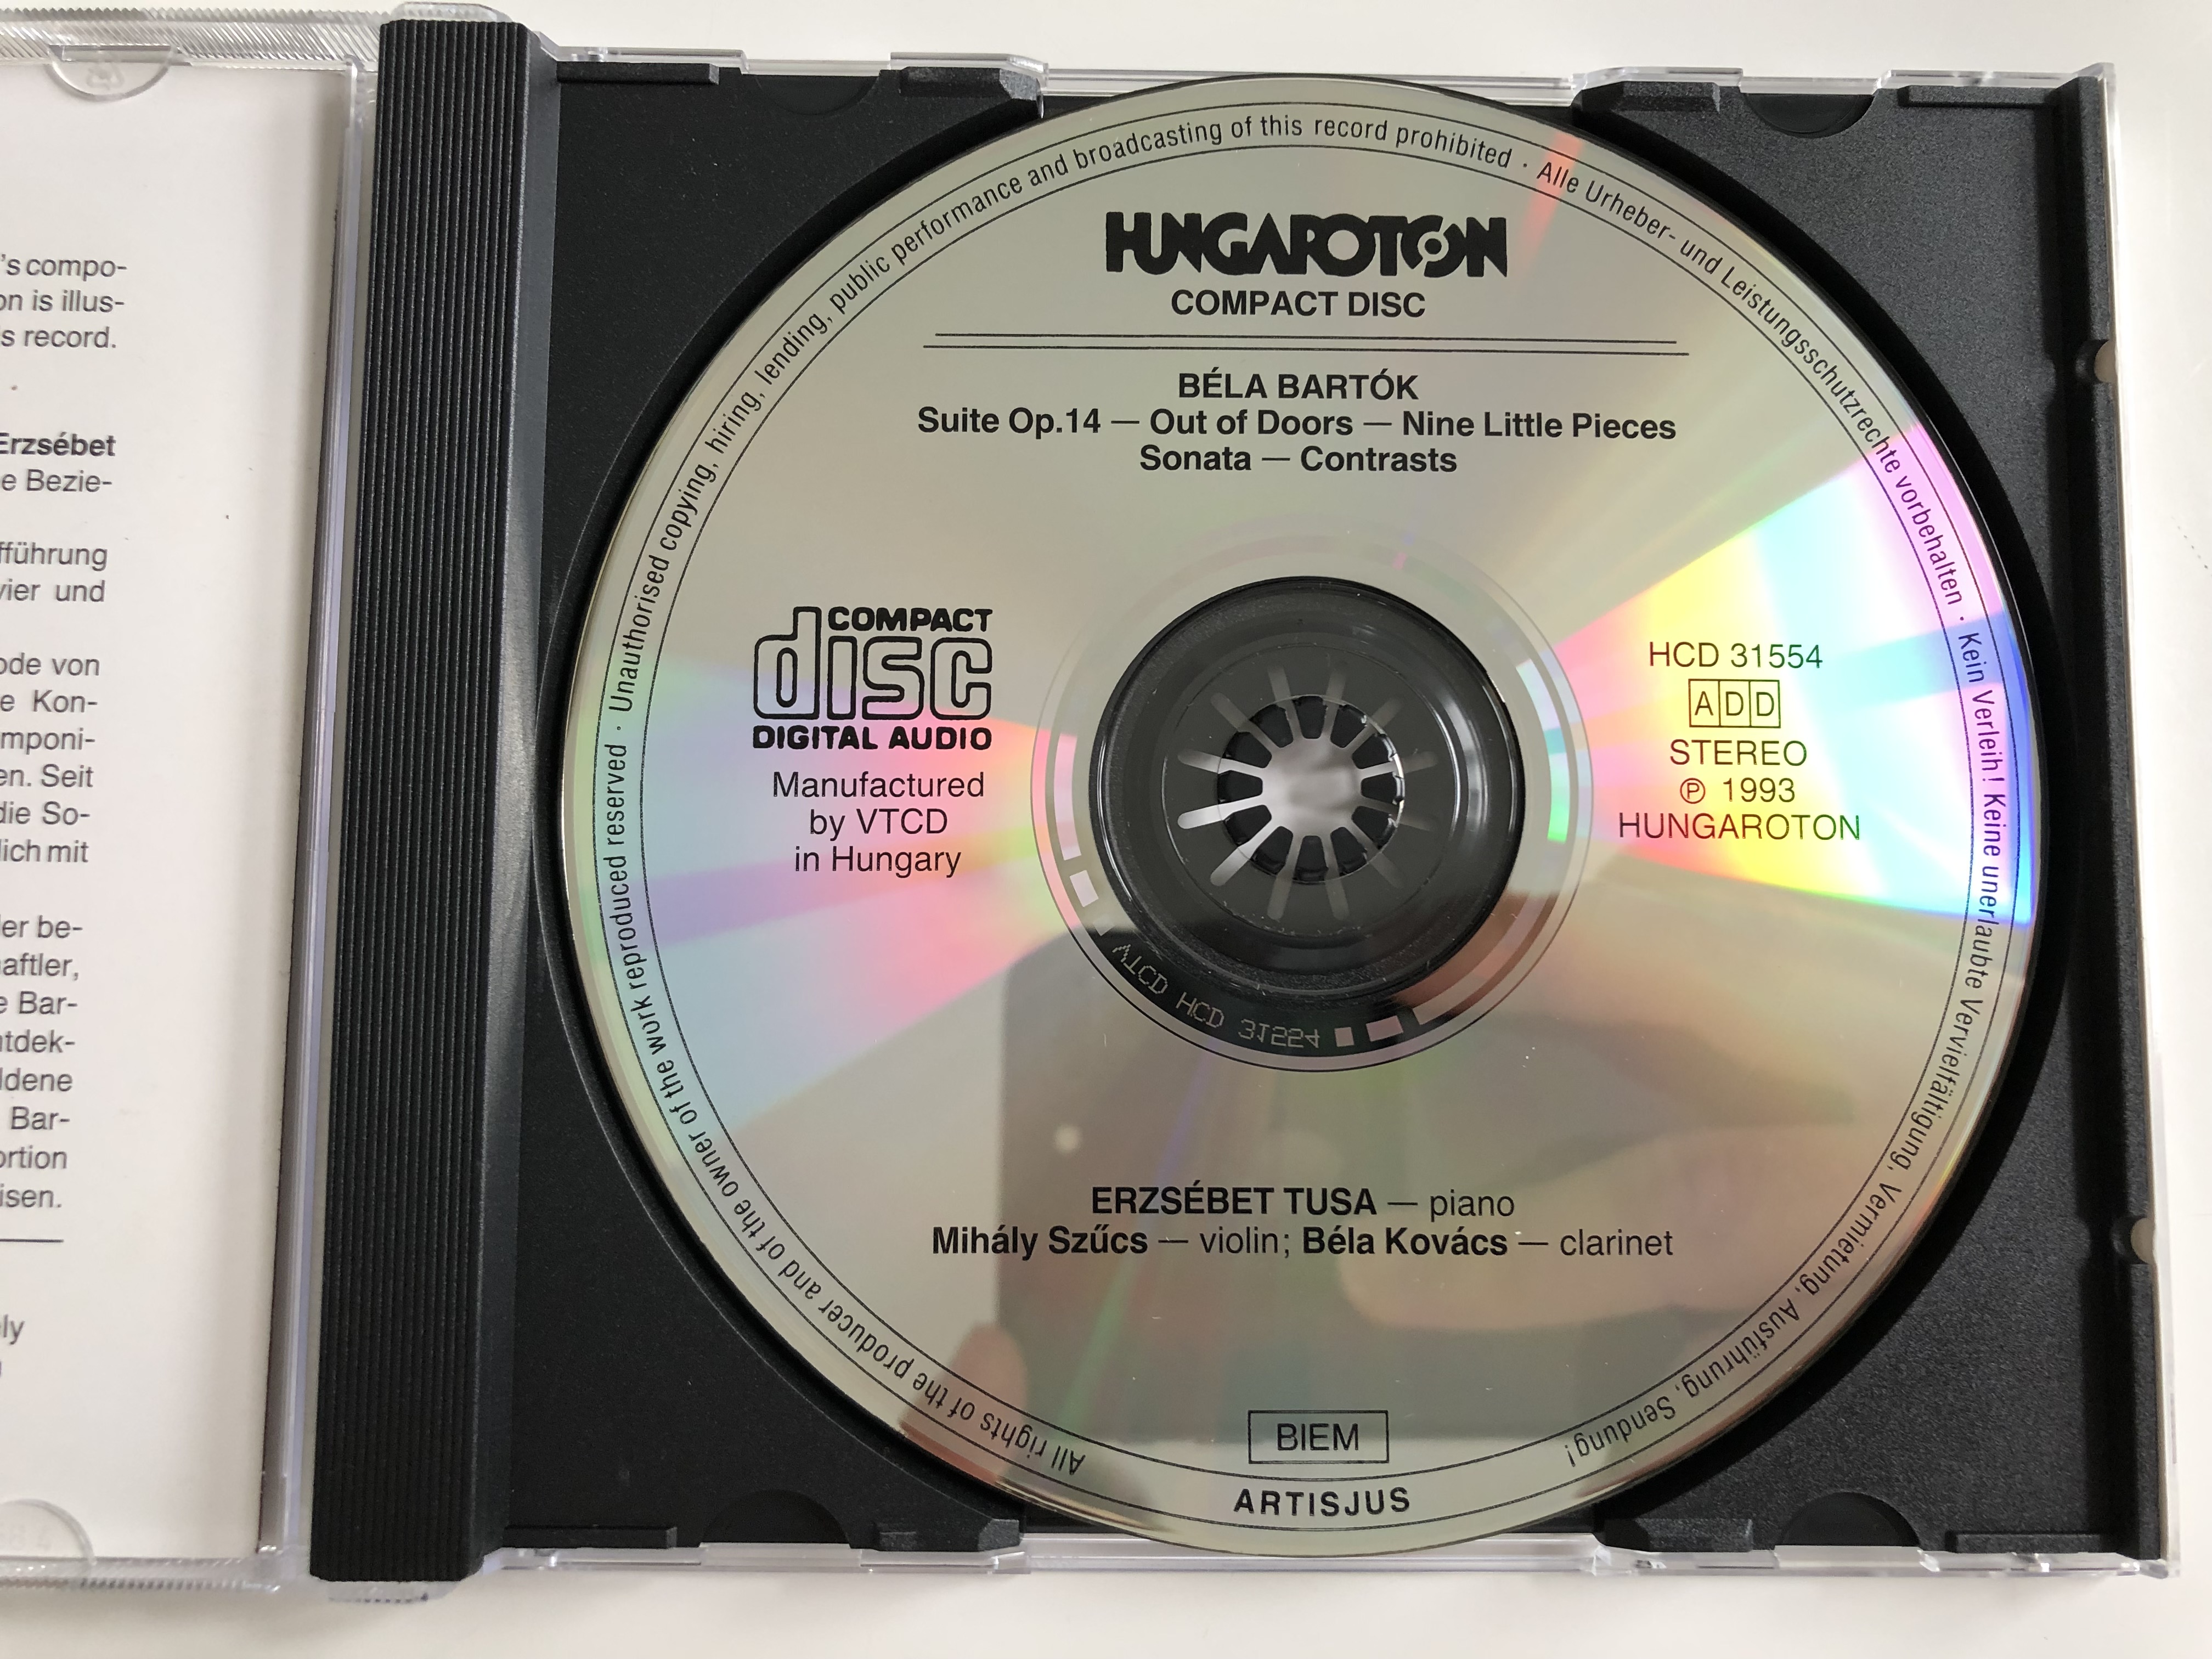 bartok-suite-op.14-out-of-doors-sonata-nine-little-pieces-contrasts-erzsebet-tusa-piano-hungaroton-audio-cd-1993-stereo-hcd-31554-4-.jpg